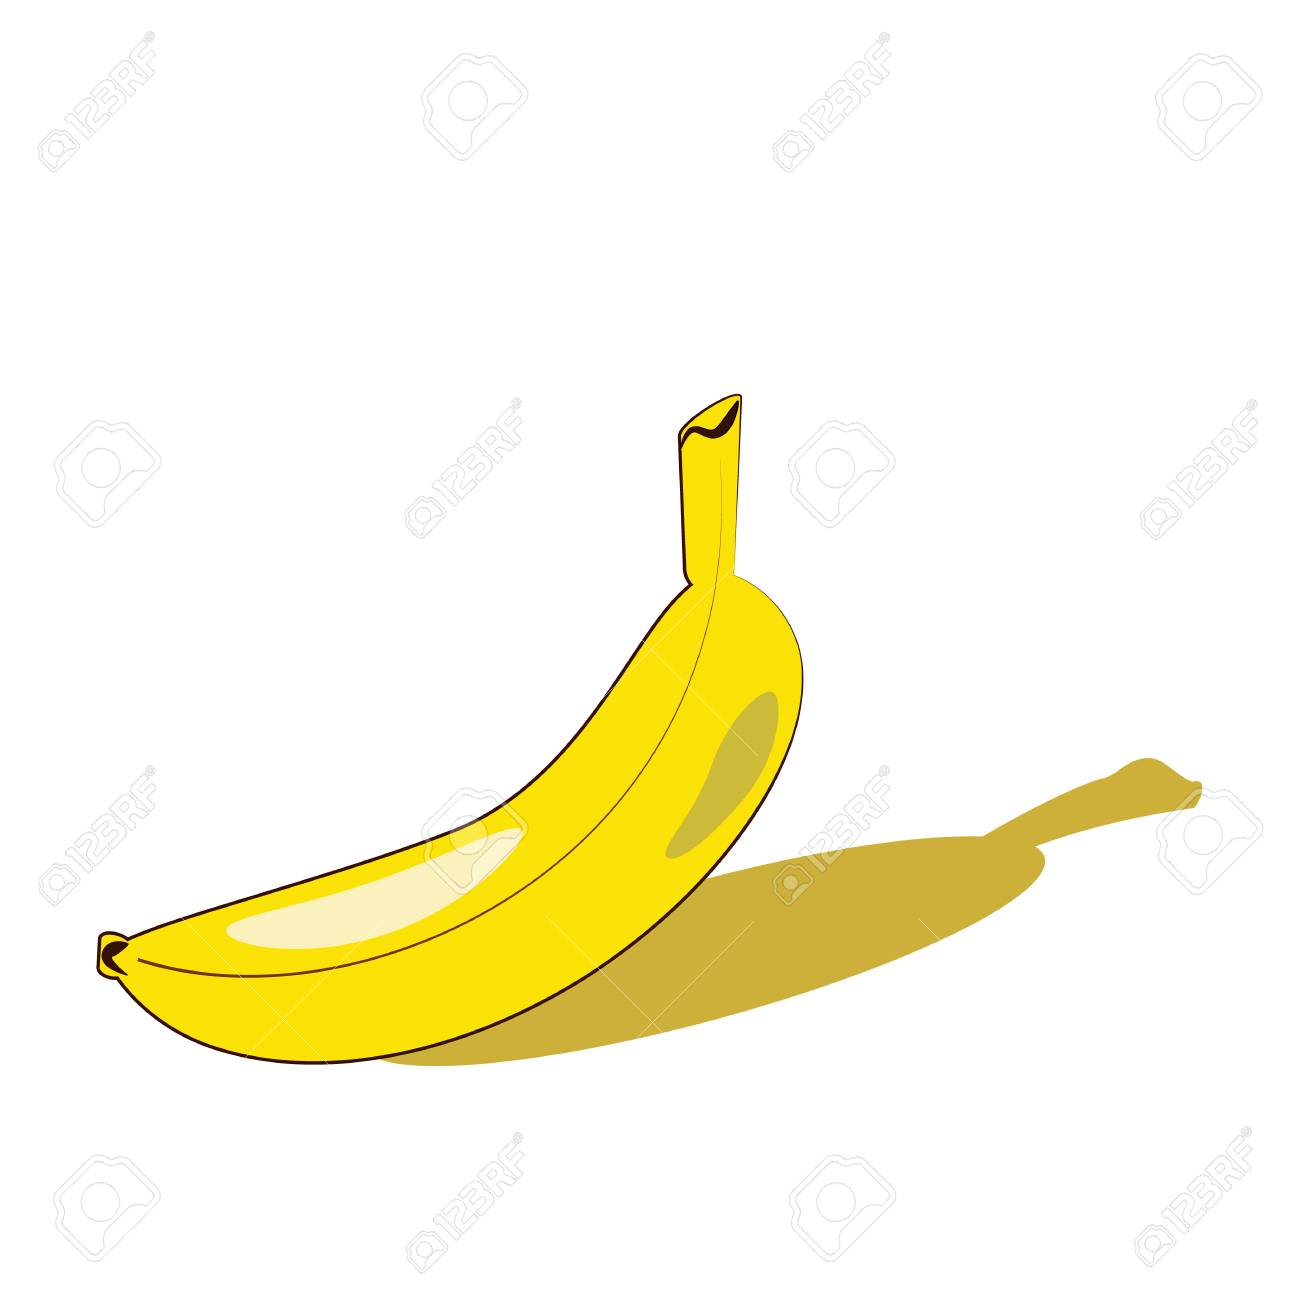 banana clipart shadow